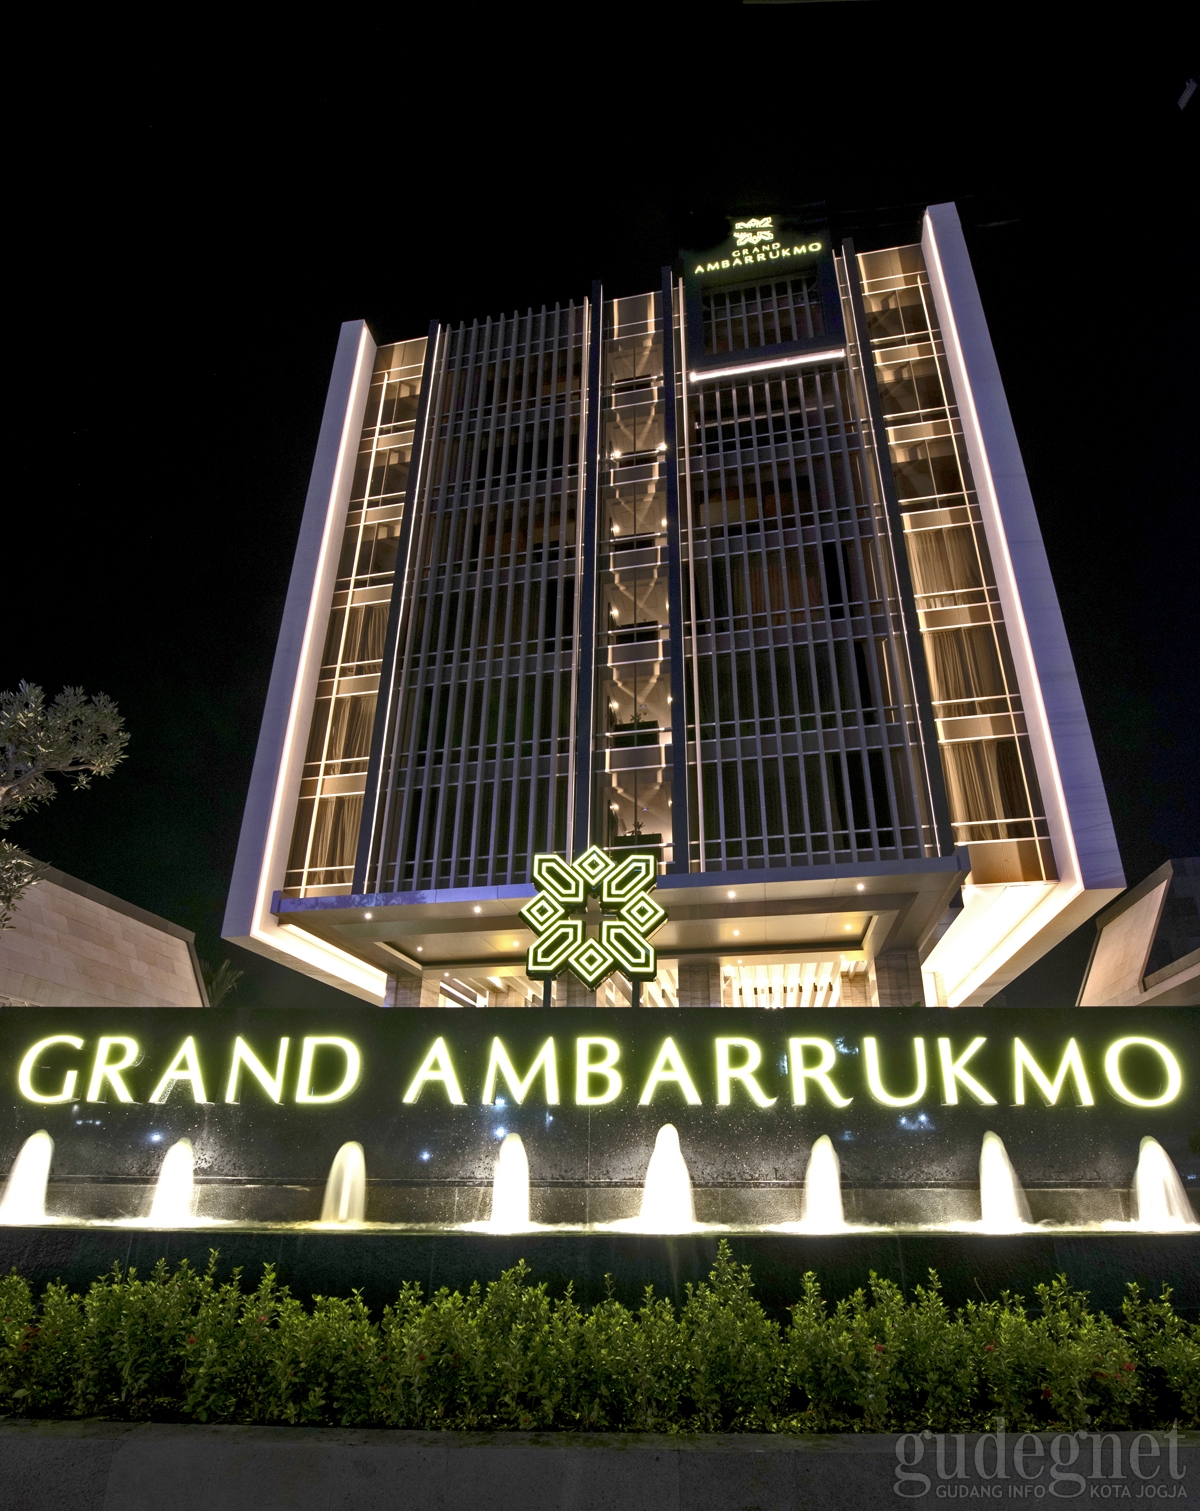 Grand Ambarrukmo